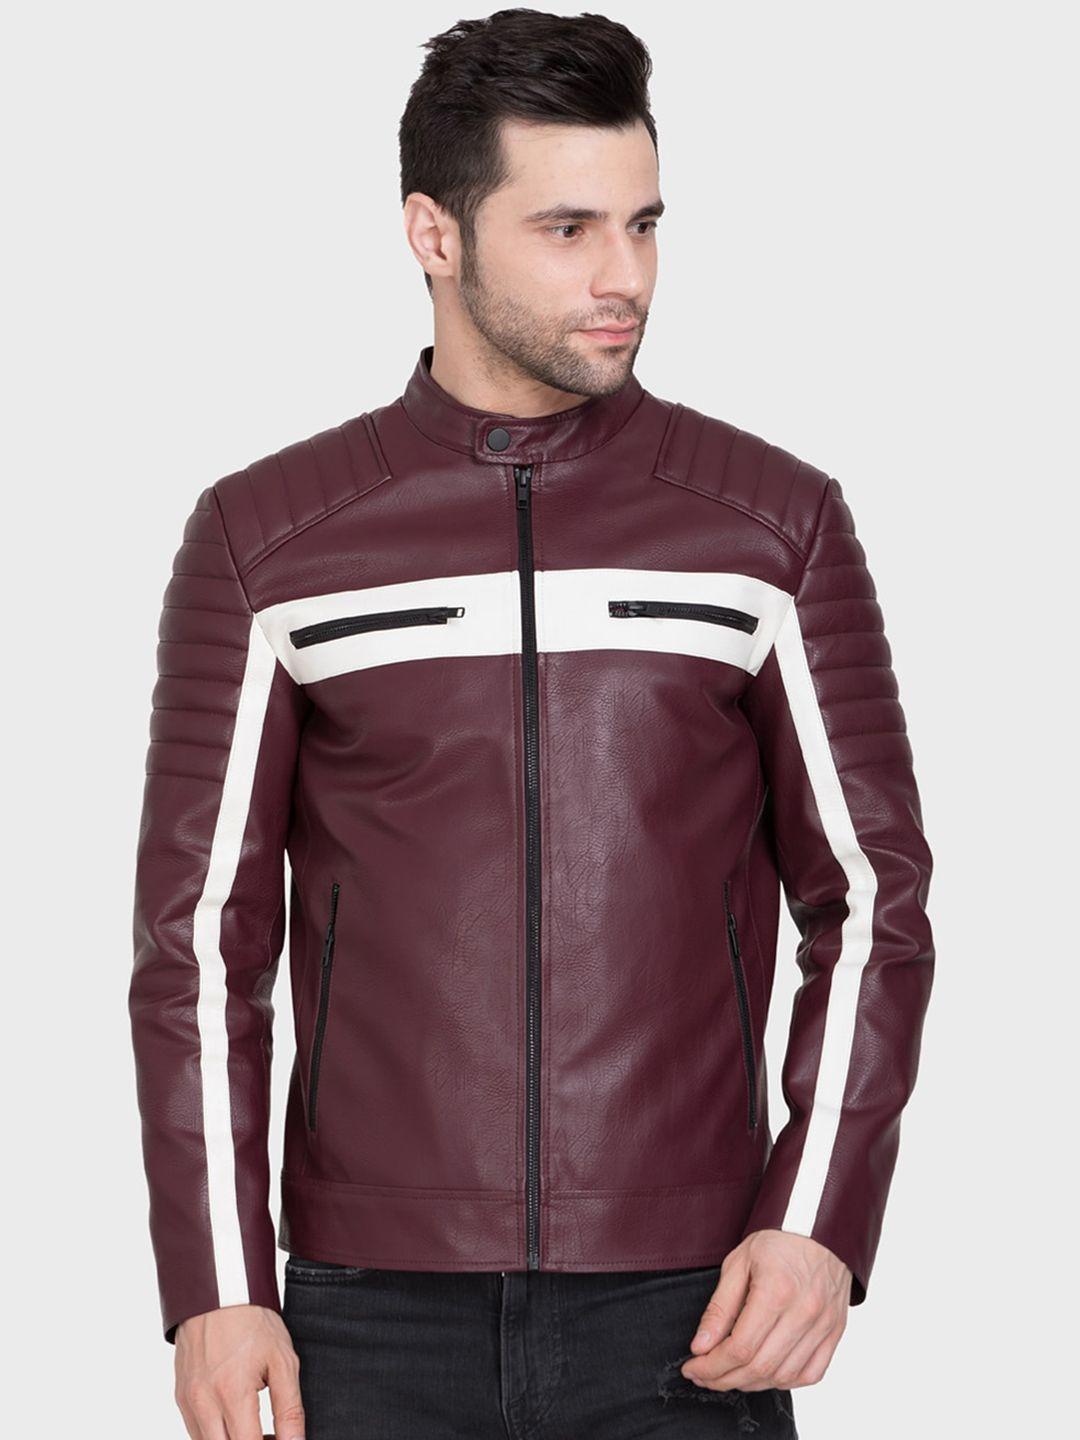 justanned colourblocked lightweight biker jacket